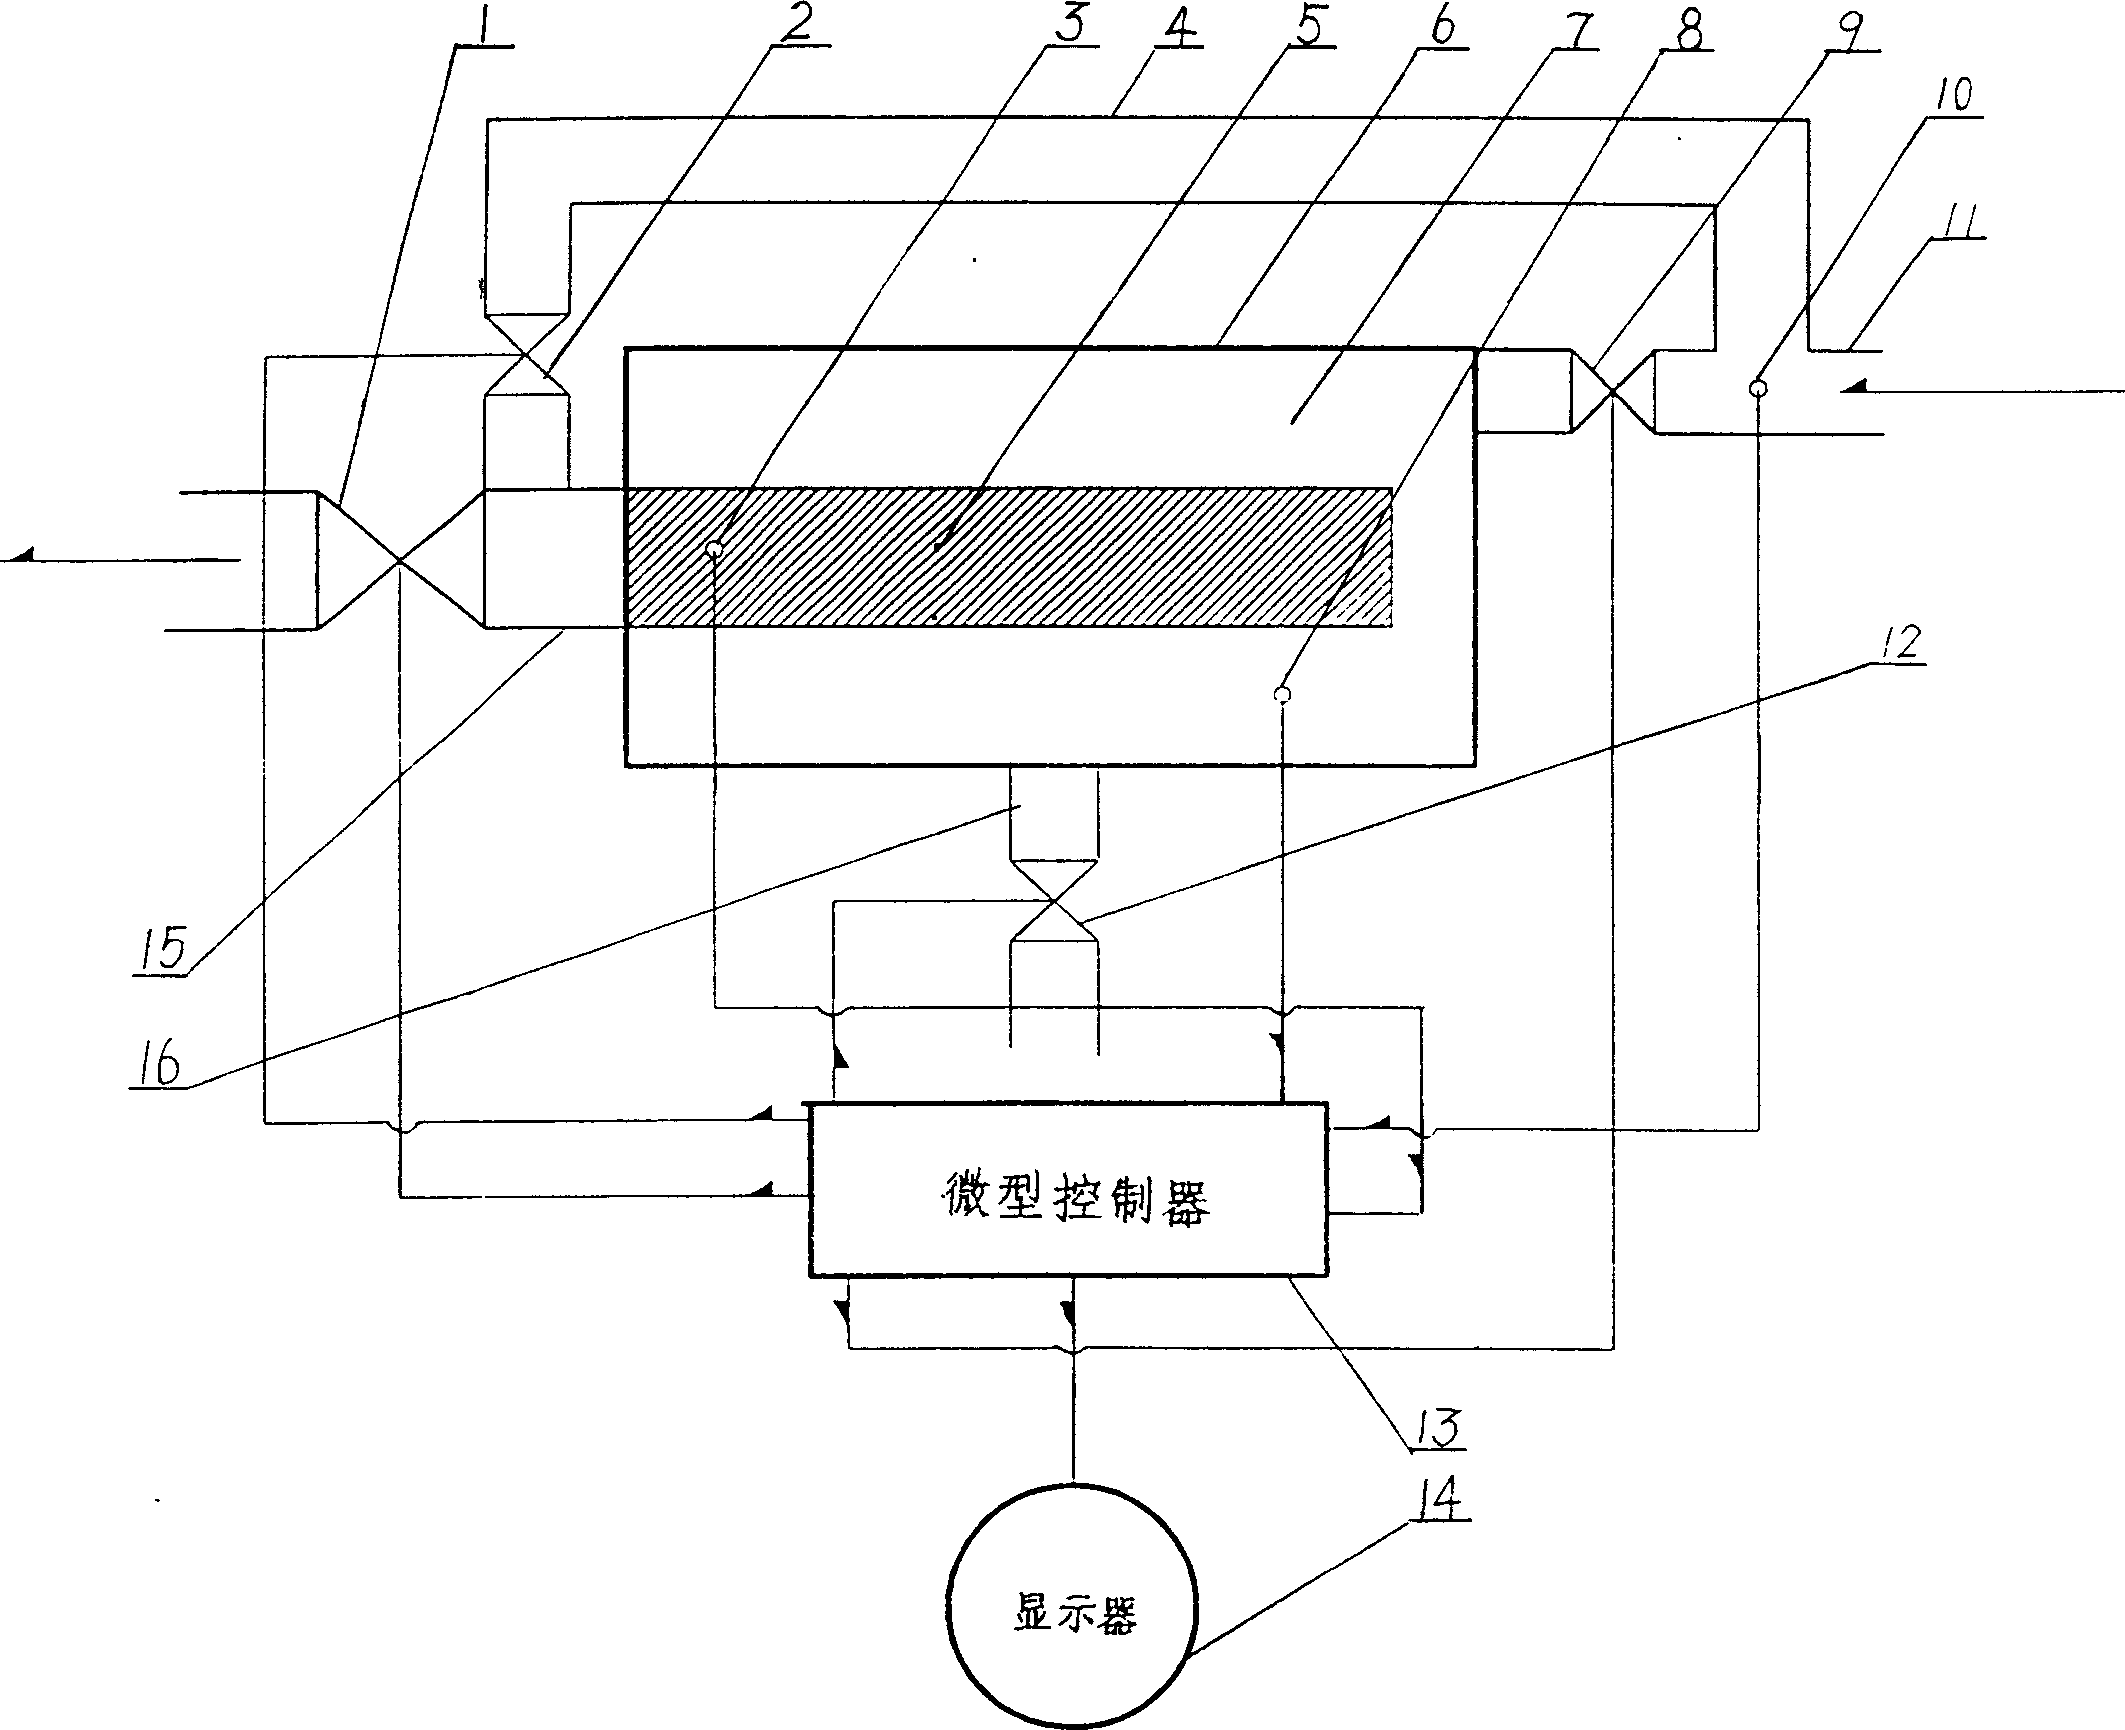 Automatic control arrangement of mechanical filter